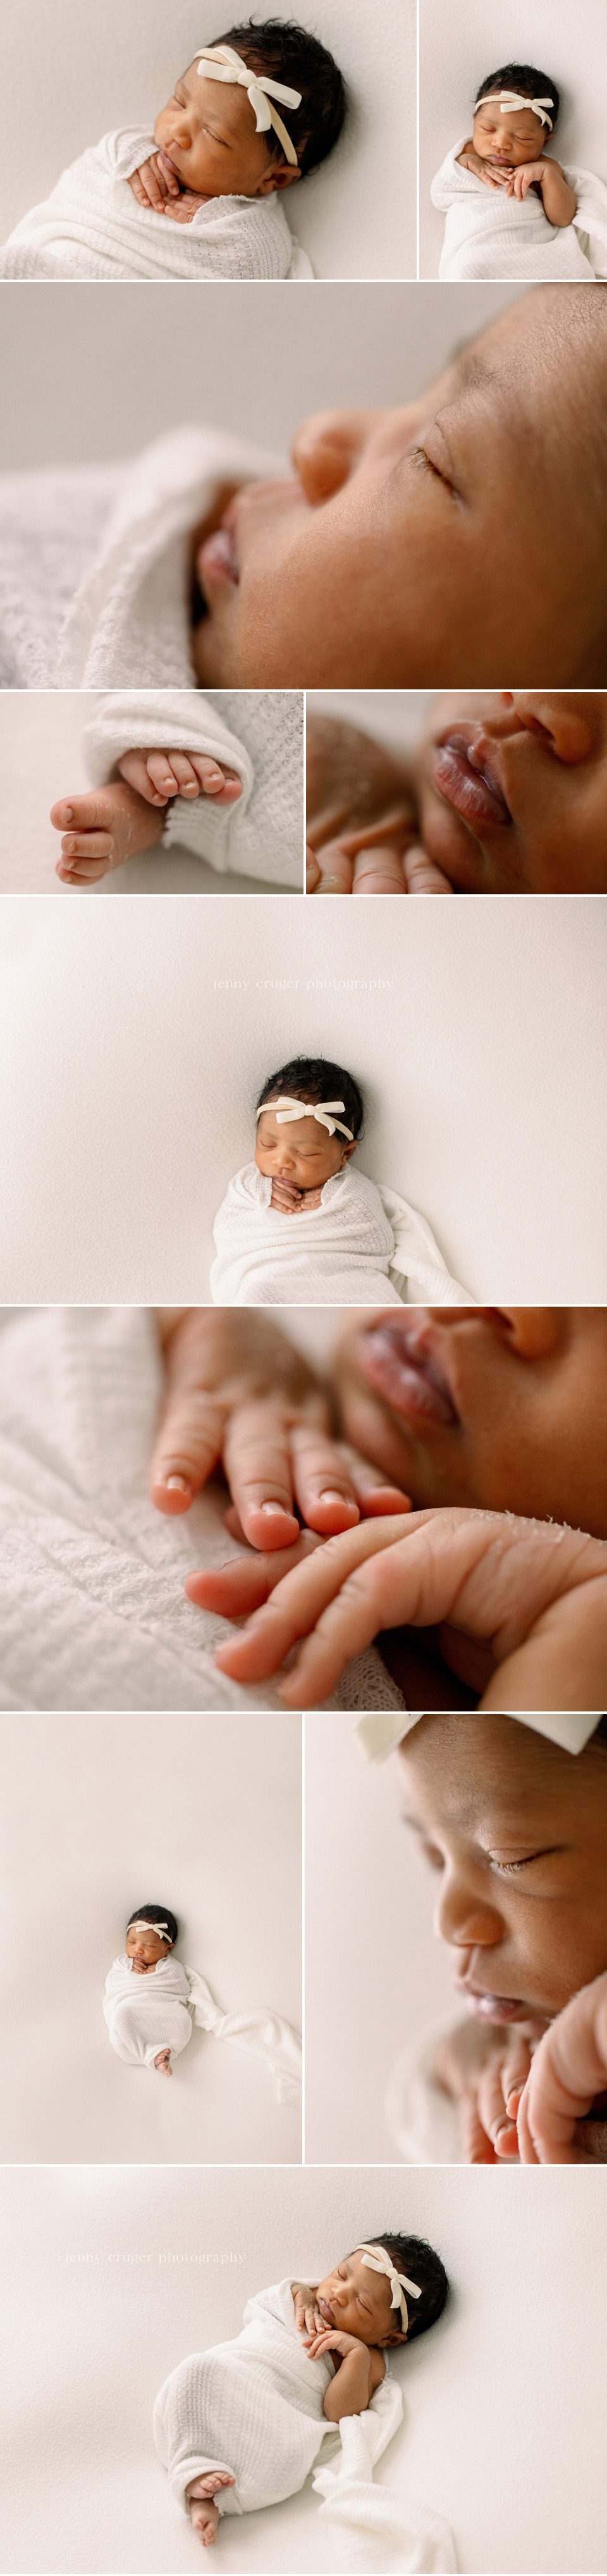 close up newborn images and newborn baby on white blanket